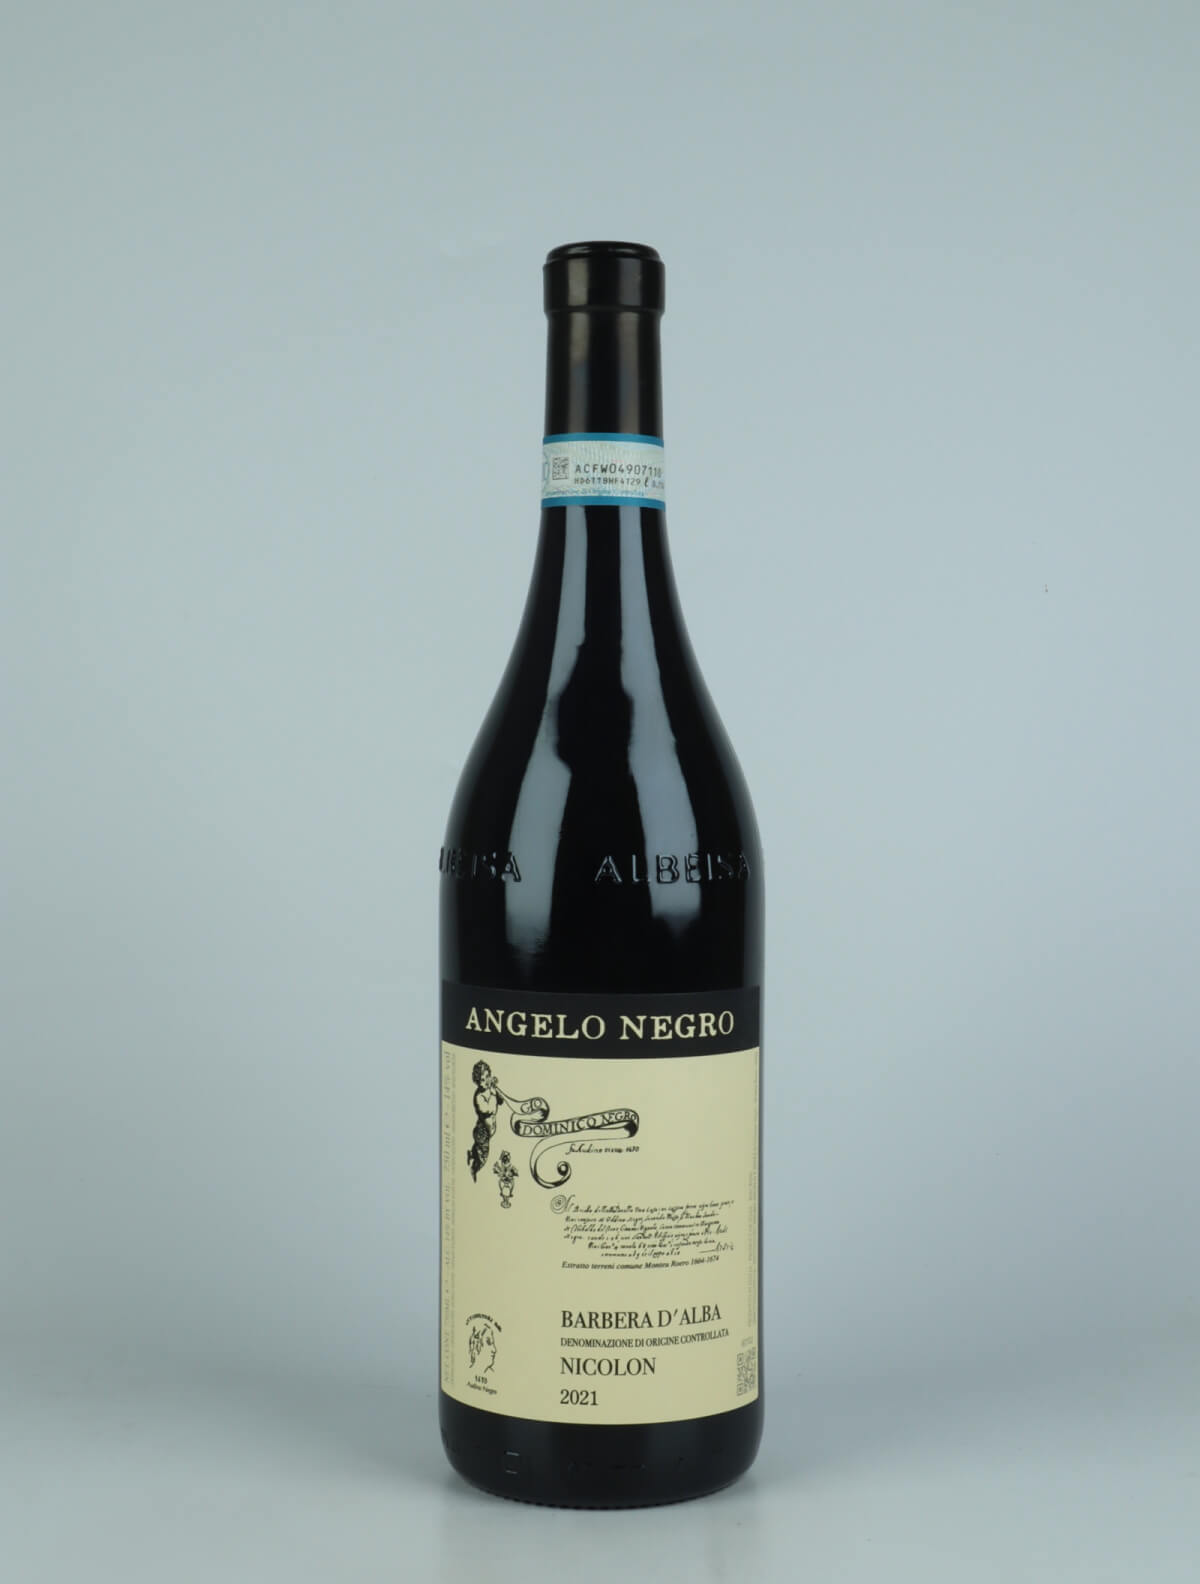 En flaske 2021 Barbera d'Alba - Nicolon Rødvin fra Angelo Negro, Piemonte i Italien